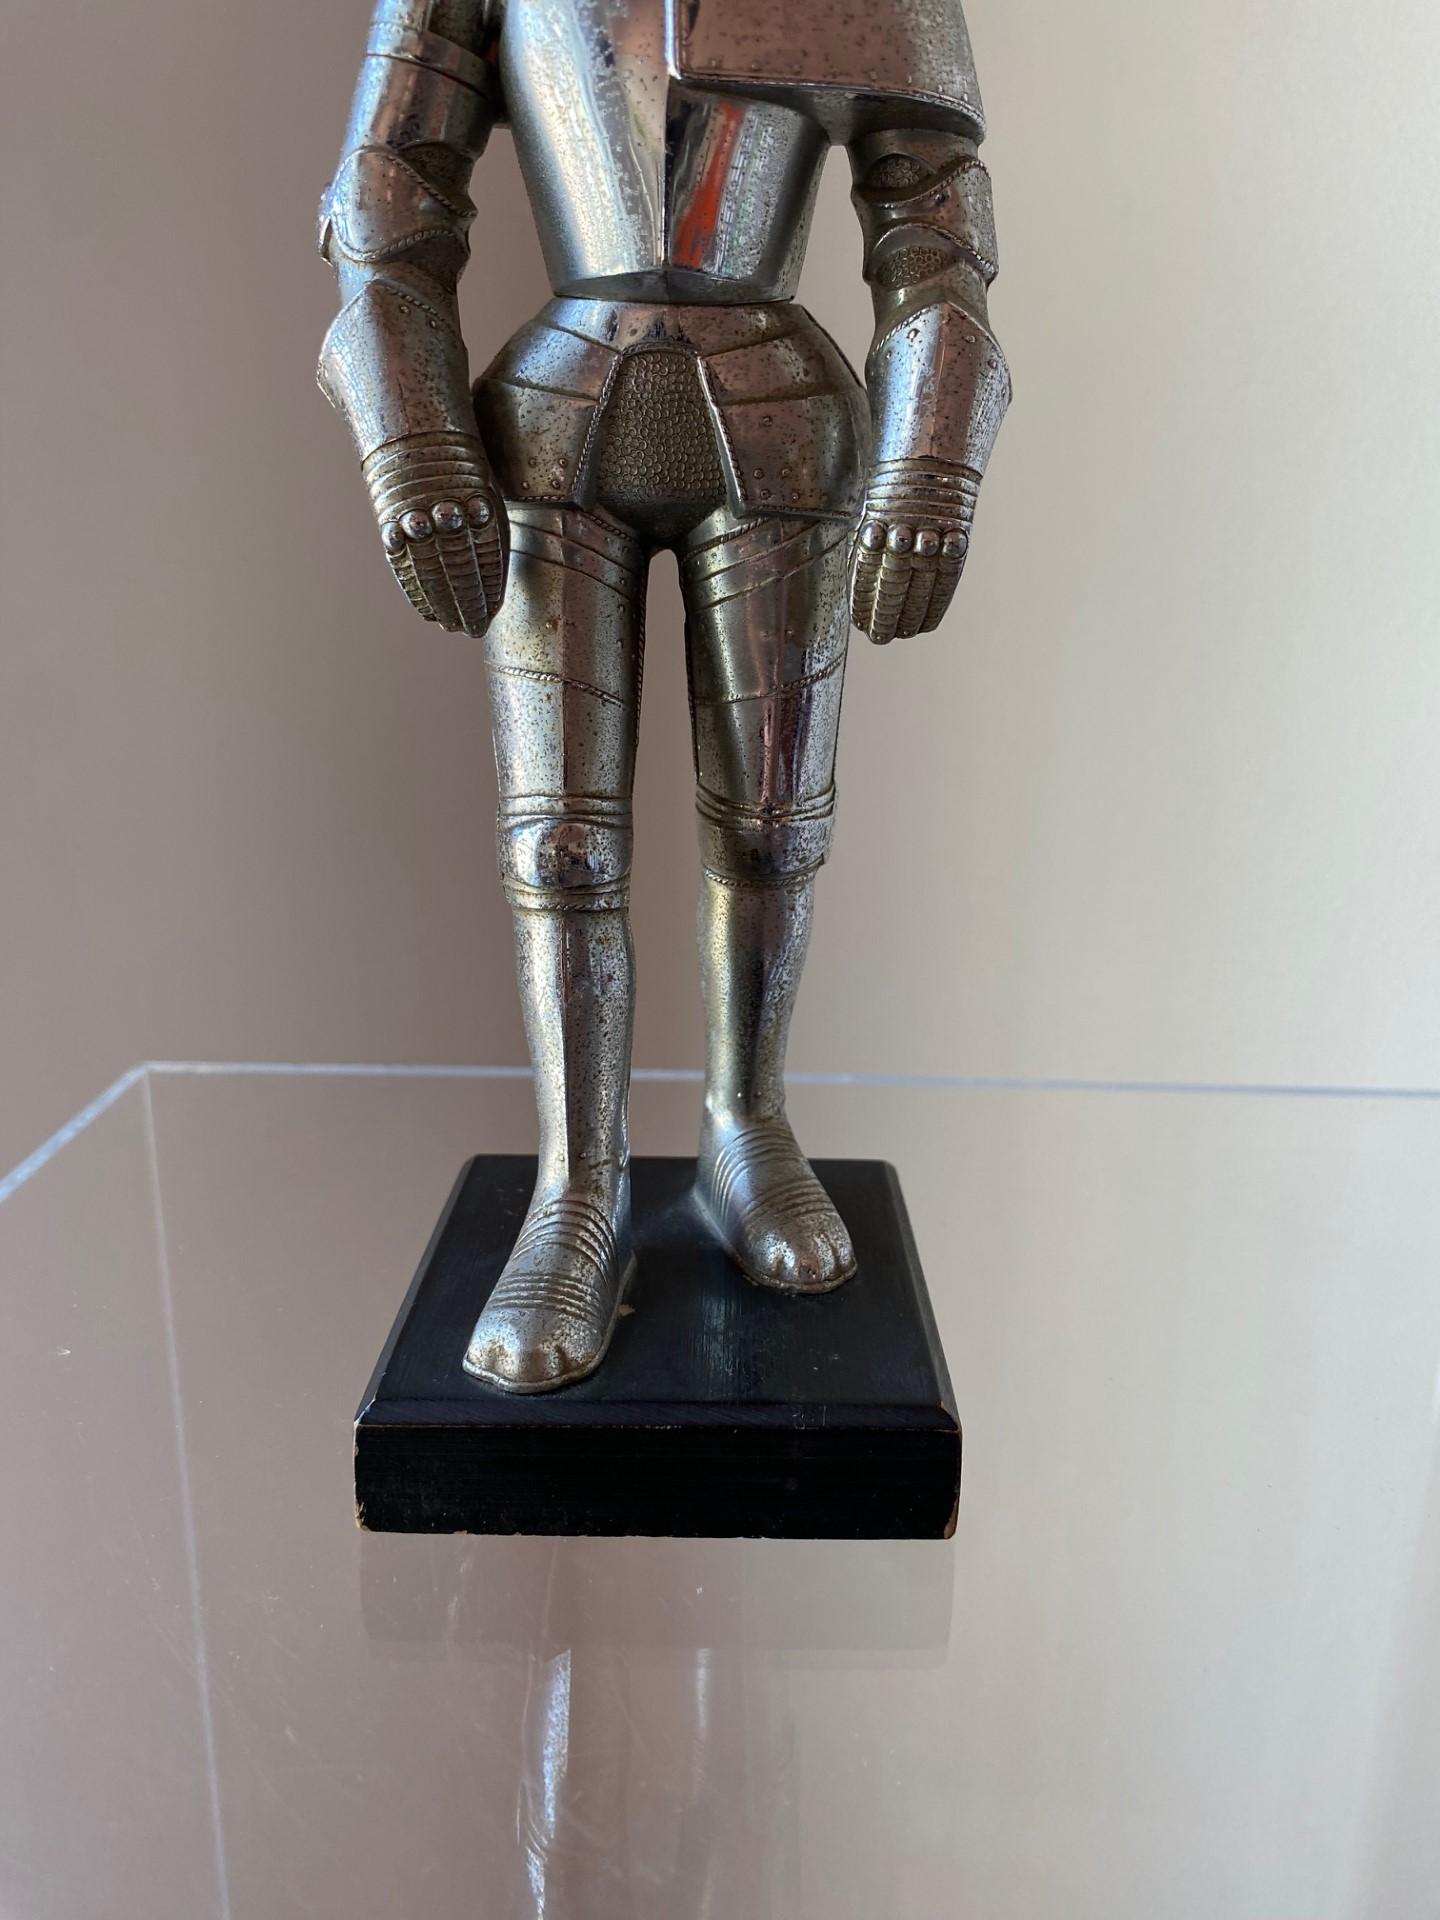 Cast Vintage Suit of Armor Medieval Knight Sculpture Lighter 1930s For Sale